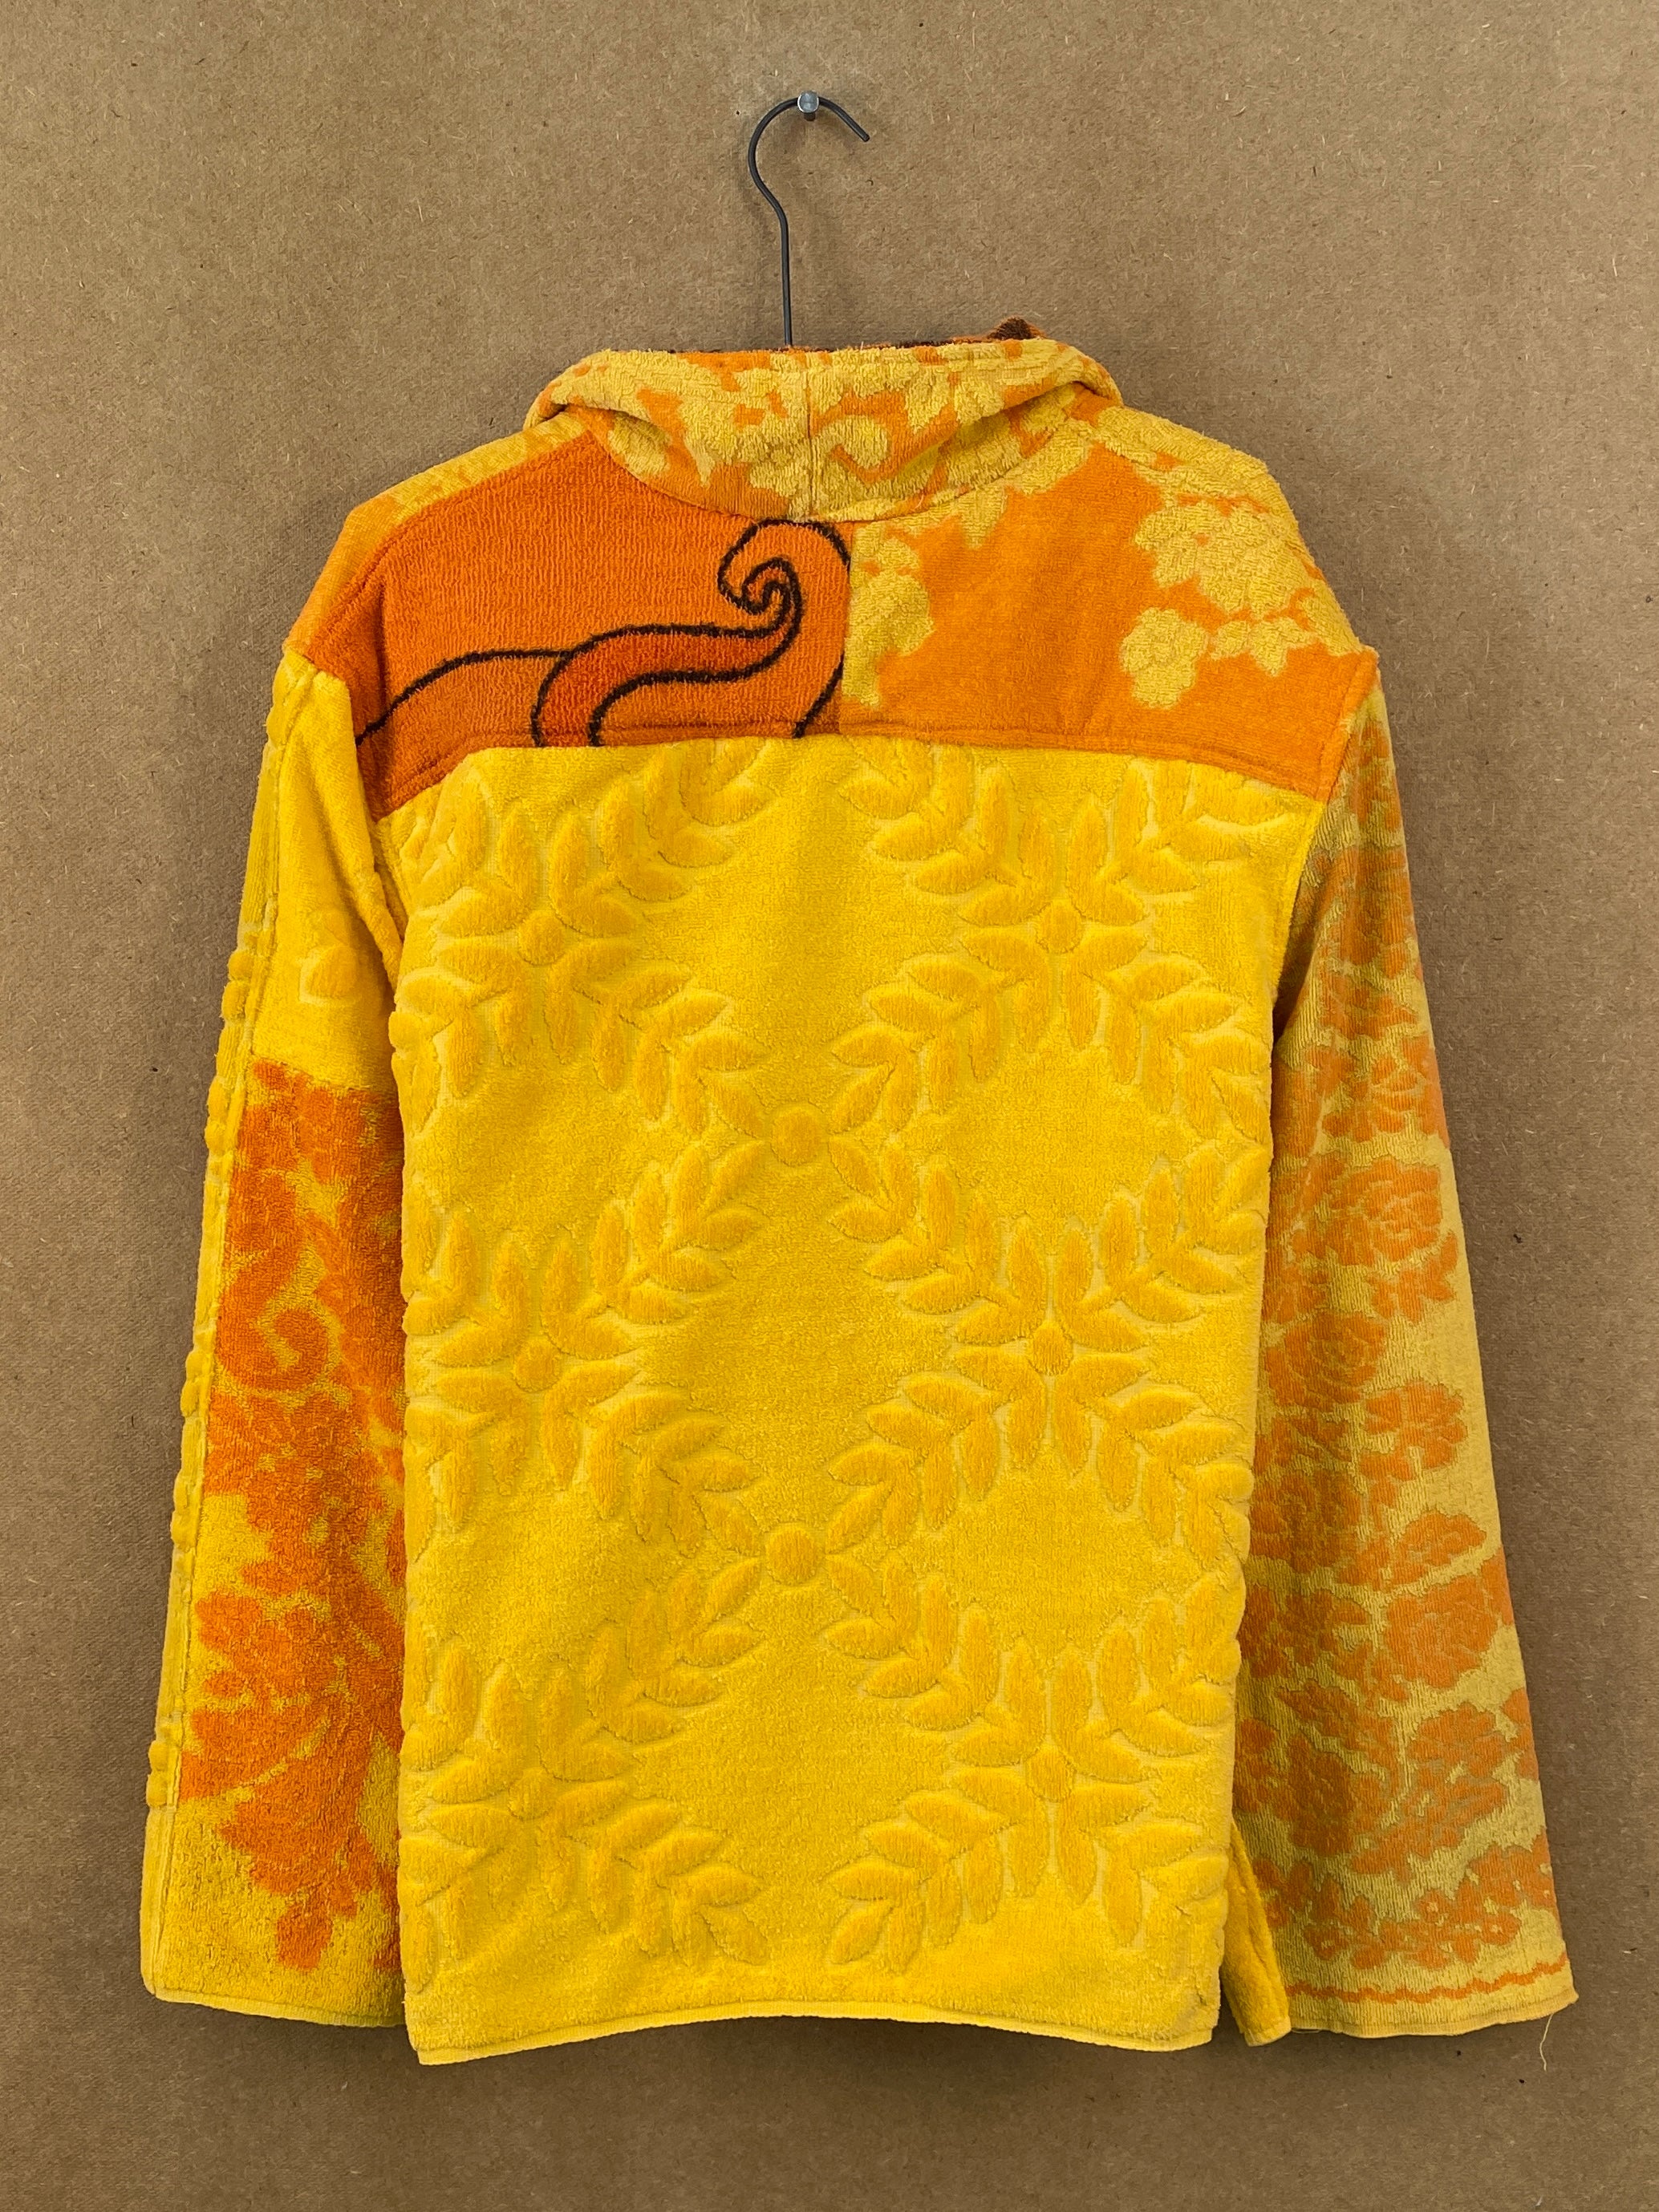 Tangerine Towel Jacket - L/XL